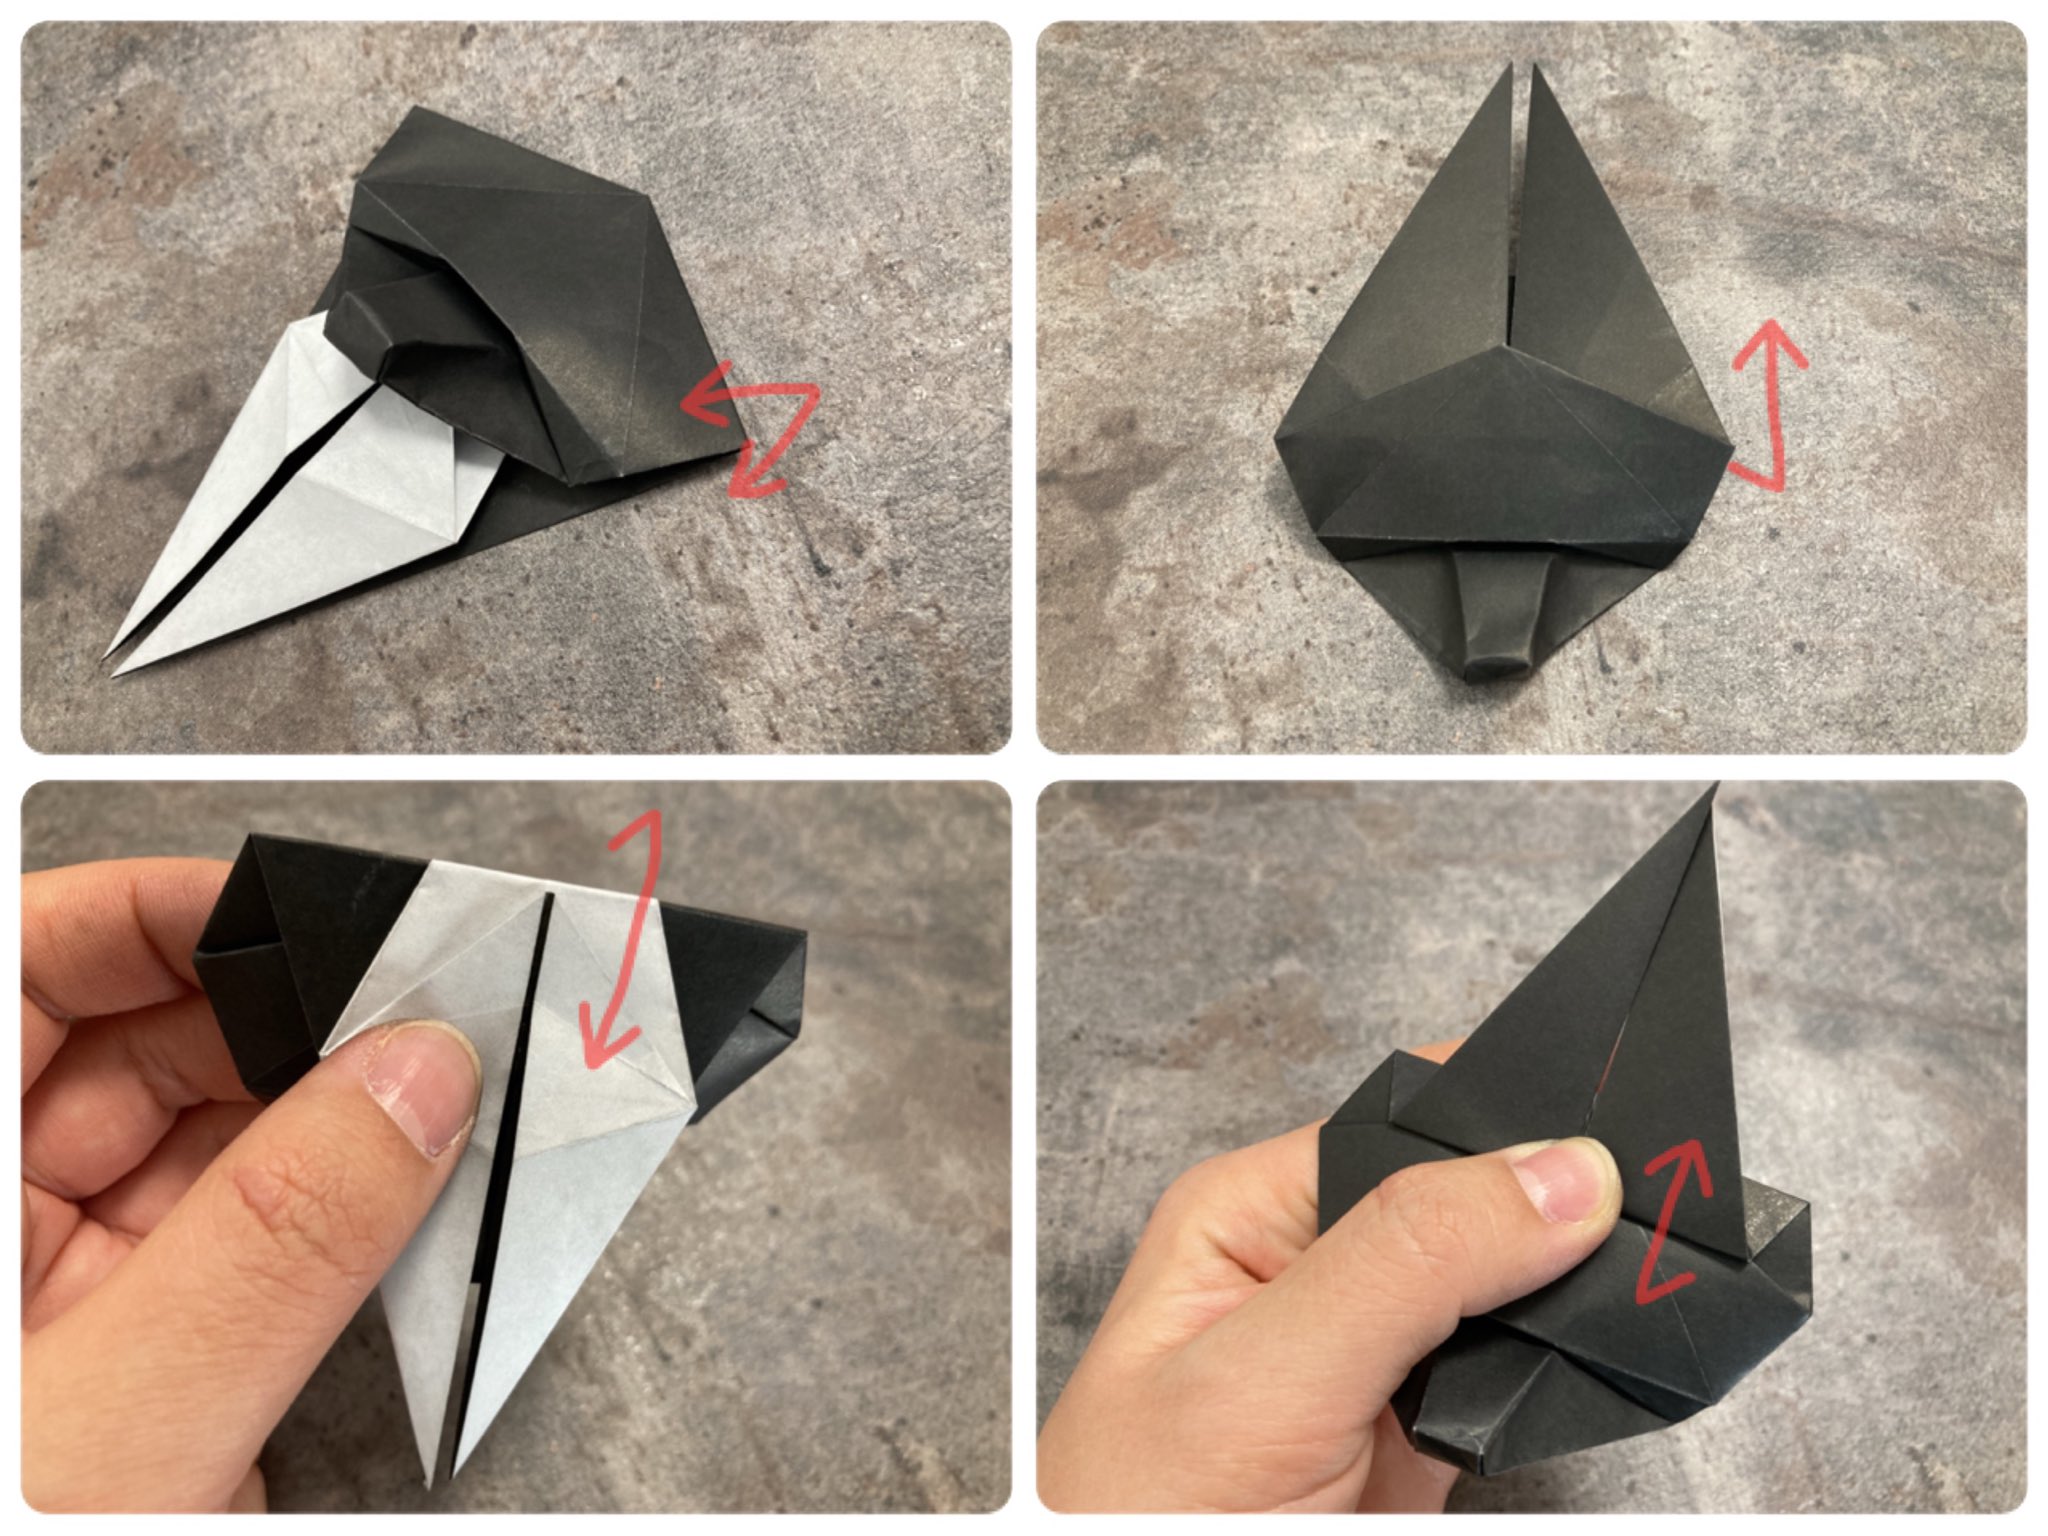 Vega 𓆩 𓆪 アヌビス面の折り方 1 3 折り紙1枚で切らずに Amp 貼らずに折れる預言の究極マスク アヌビス面の作り方です 輪っか無し How To Make Origami Anubis Mask 考案 Vega 続きはリプへ Thatskygame Sky星を紡ぐ子どもたち